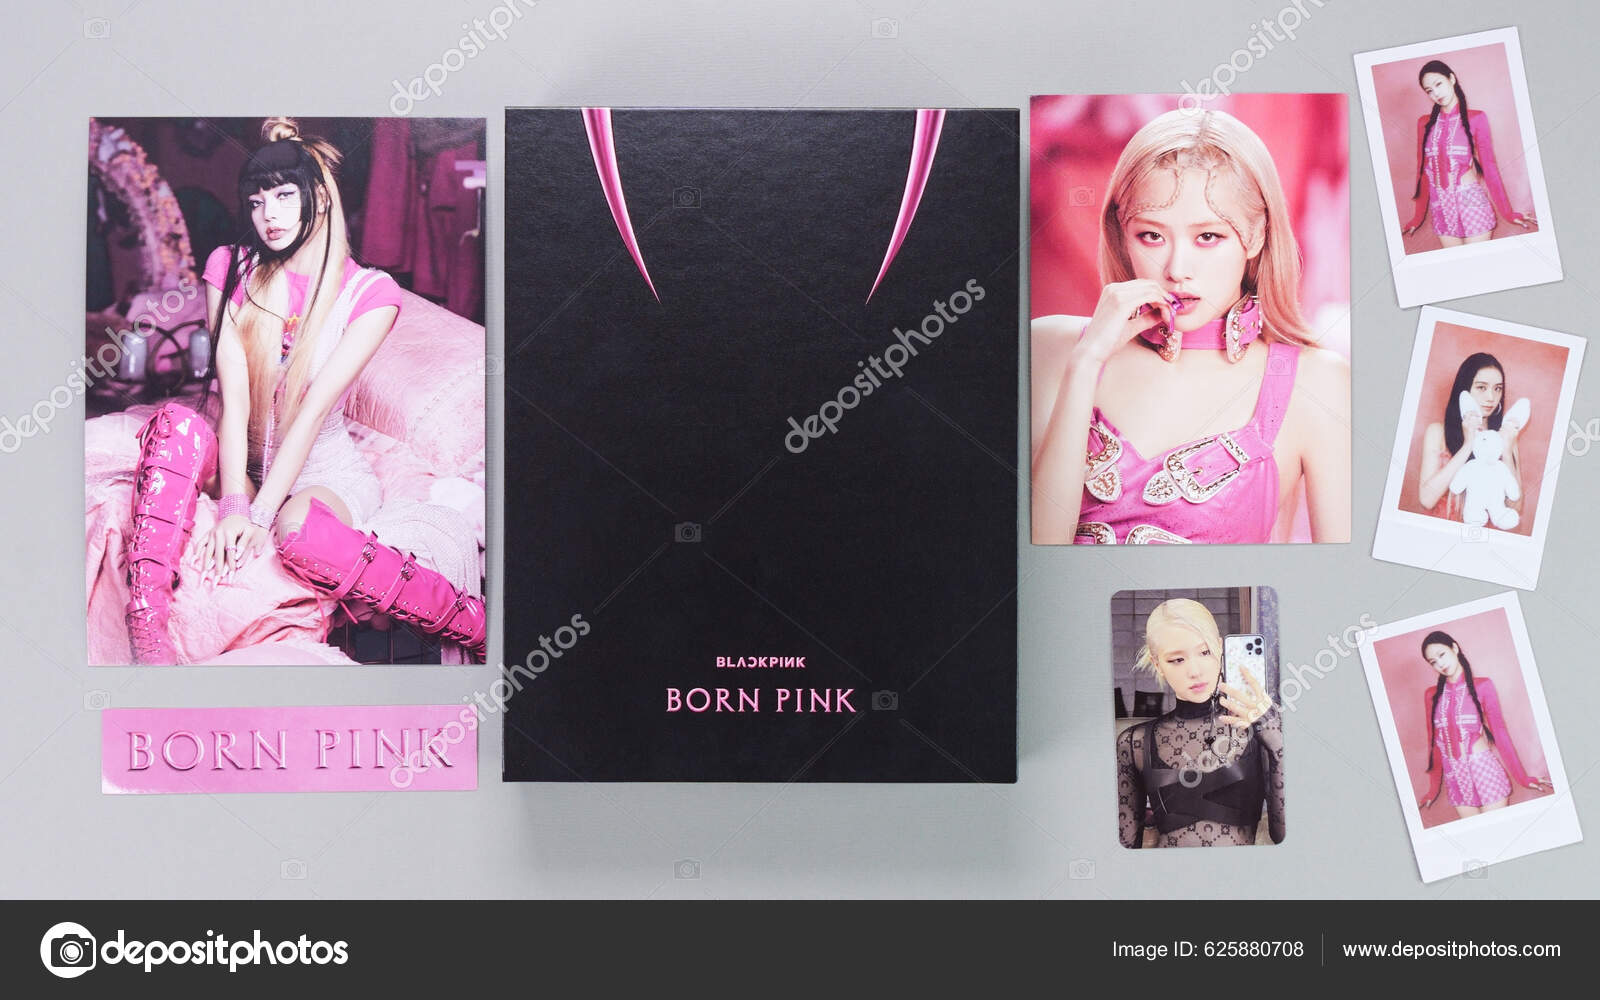 https://st5.depositphotos.com/22576762/62588/i/1600/depositphotos_625880708-stock-photo-blackpink-born-pink-2nd-album.jpg